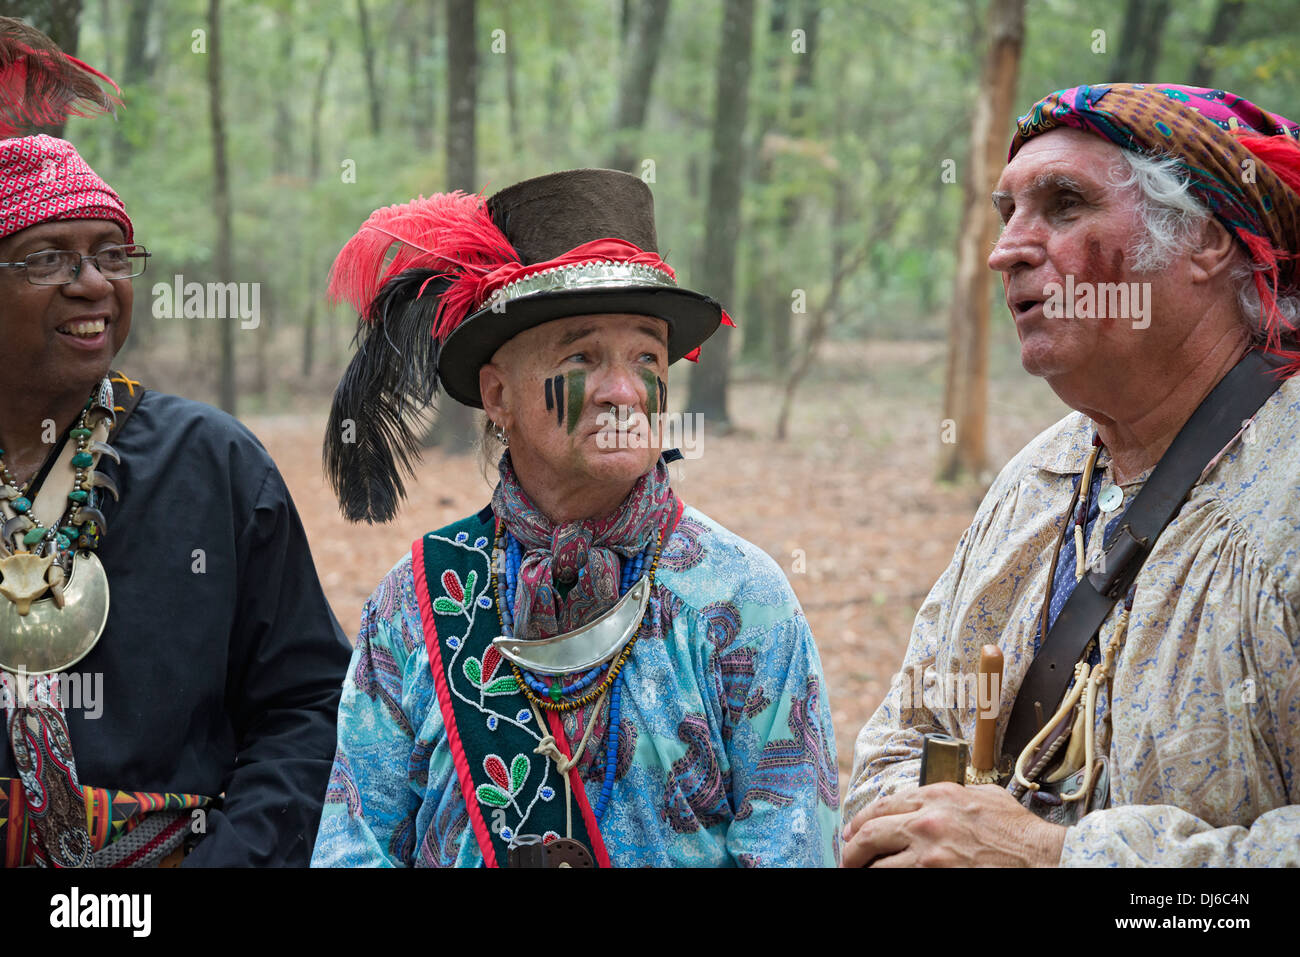 Native American Festival at Oleno State Park in North Florida. Stock Photo